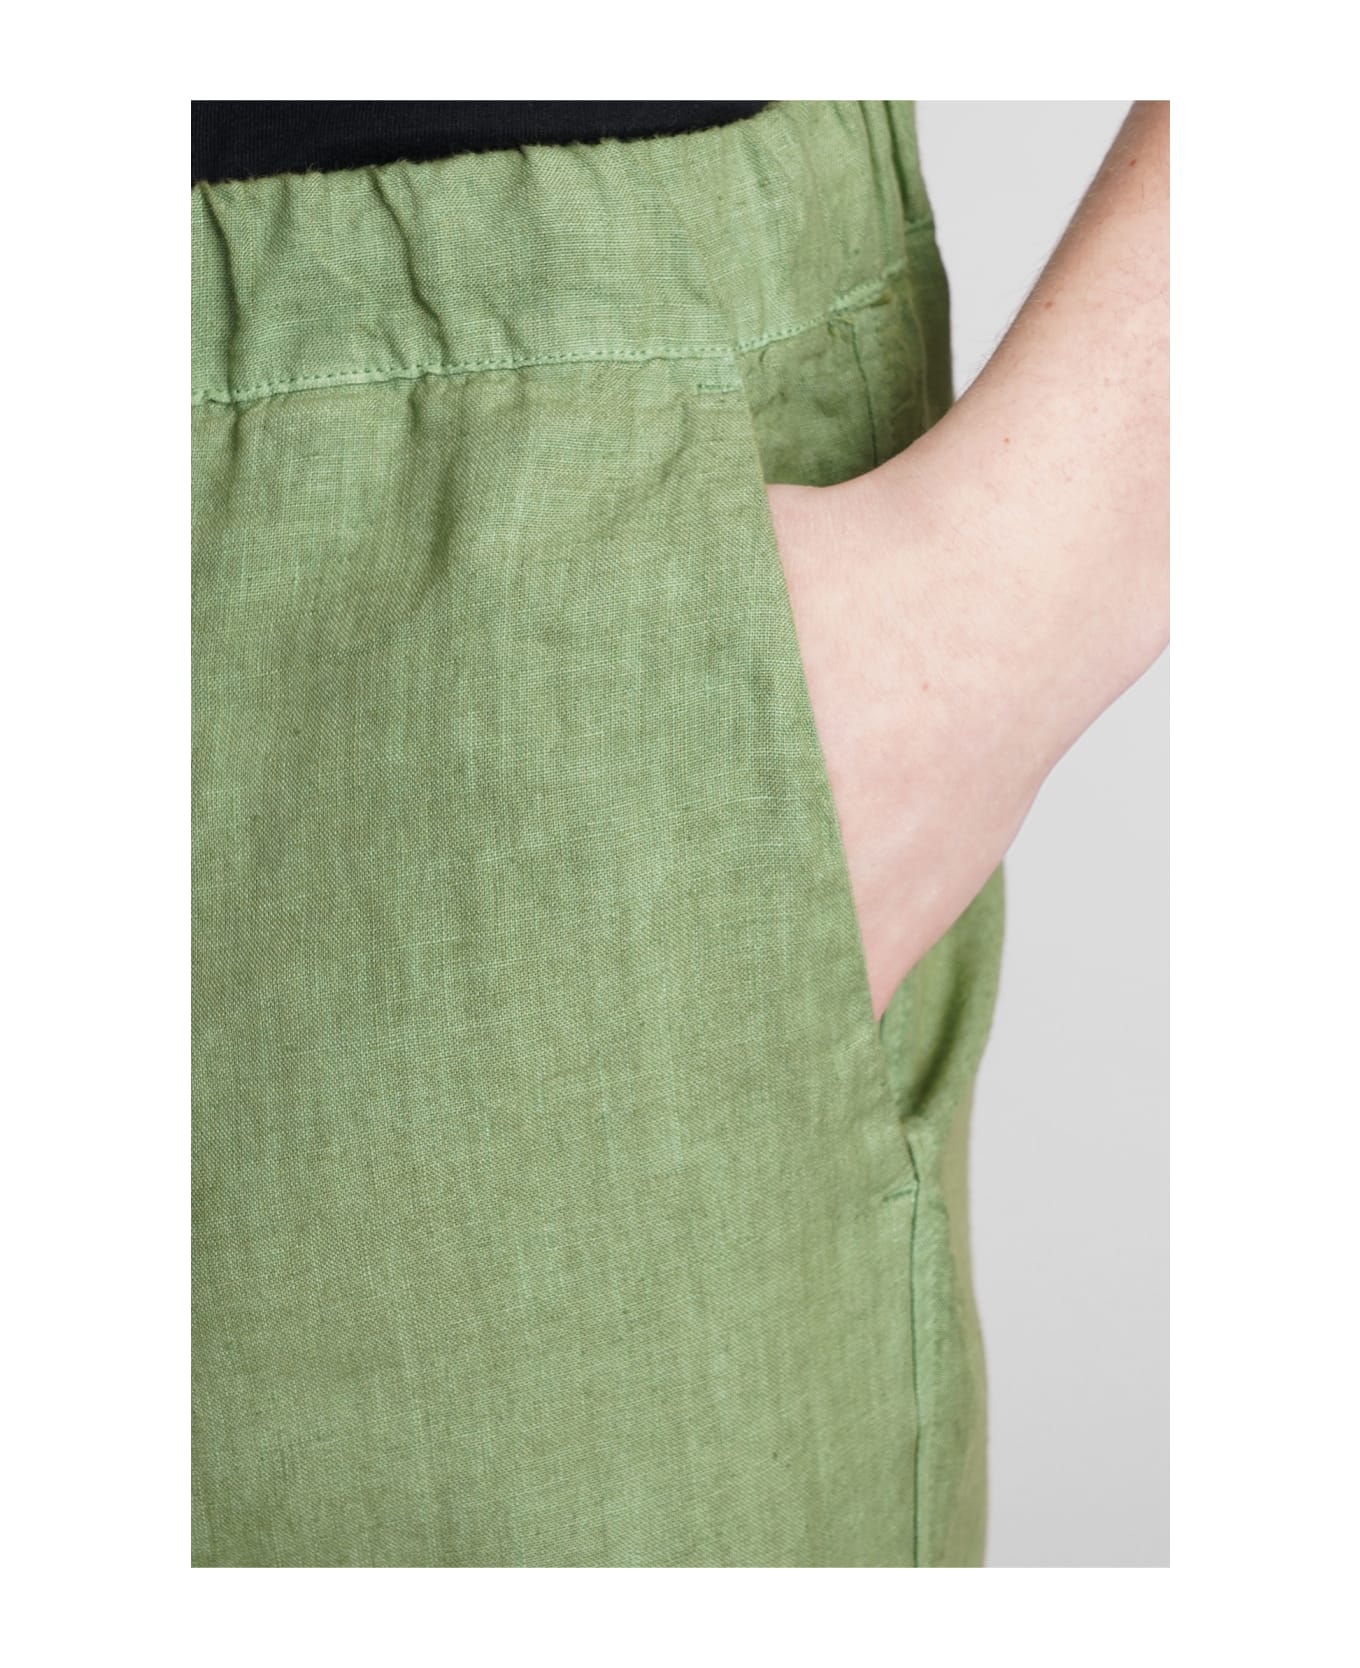 120% Lino Pants In Green Linen - Medium green soft ボトムス